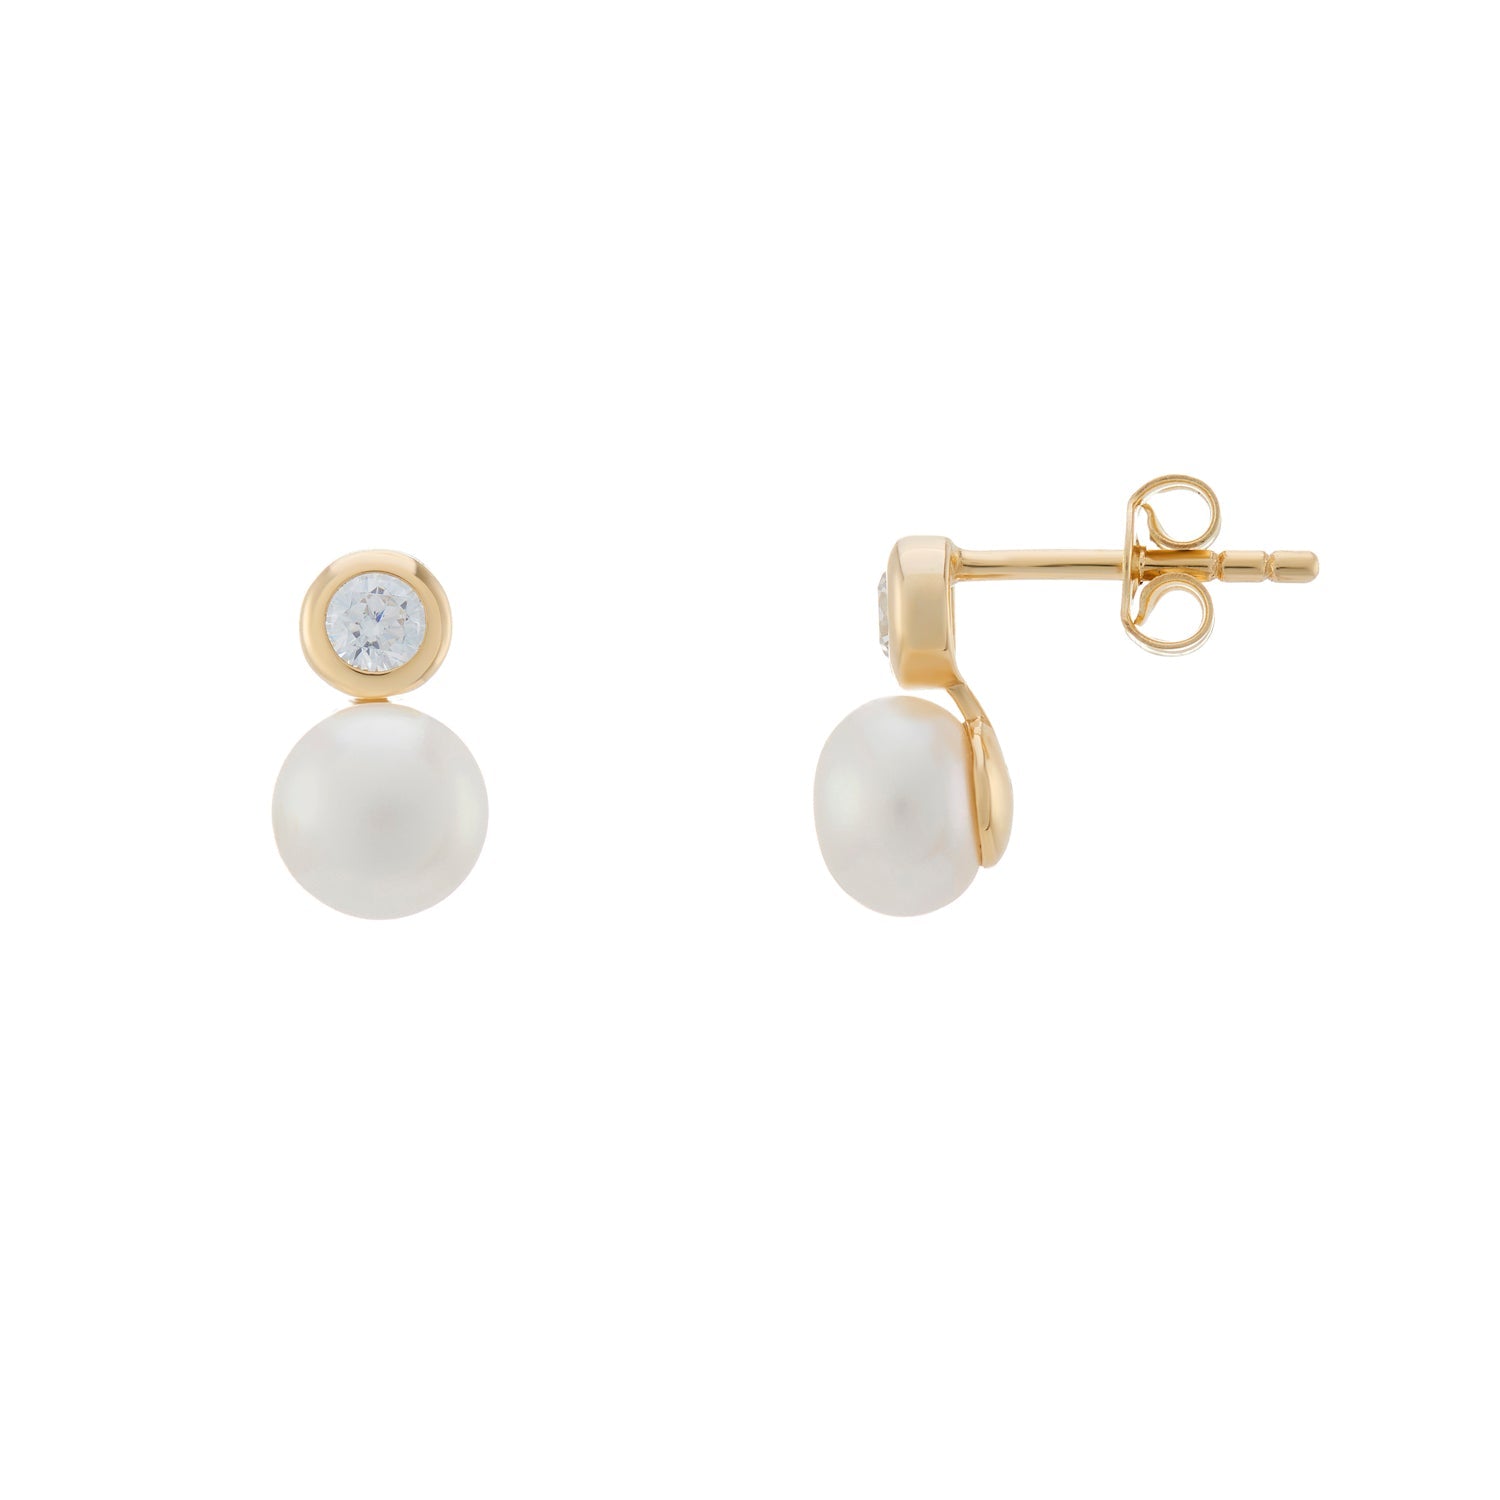 9ct gold freshwater pearl & rub over set cz stud earrings